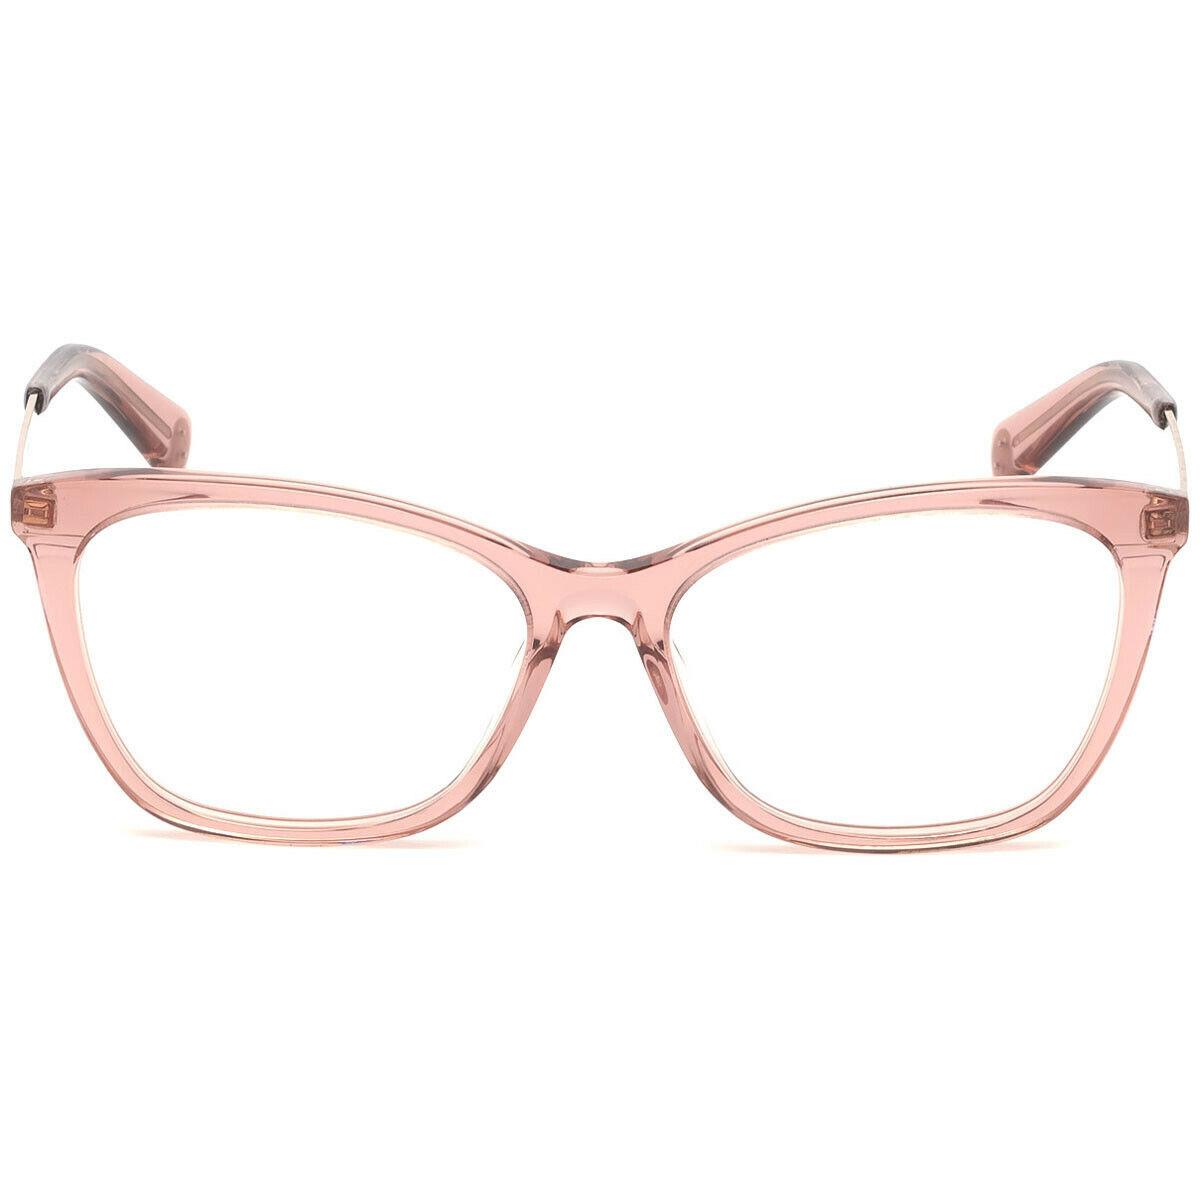 Roberto Cavalli RC 5095-F Transparen Pink 072 Plastic Eyeglasses Frame 54-15-140